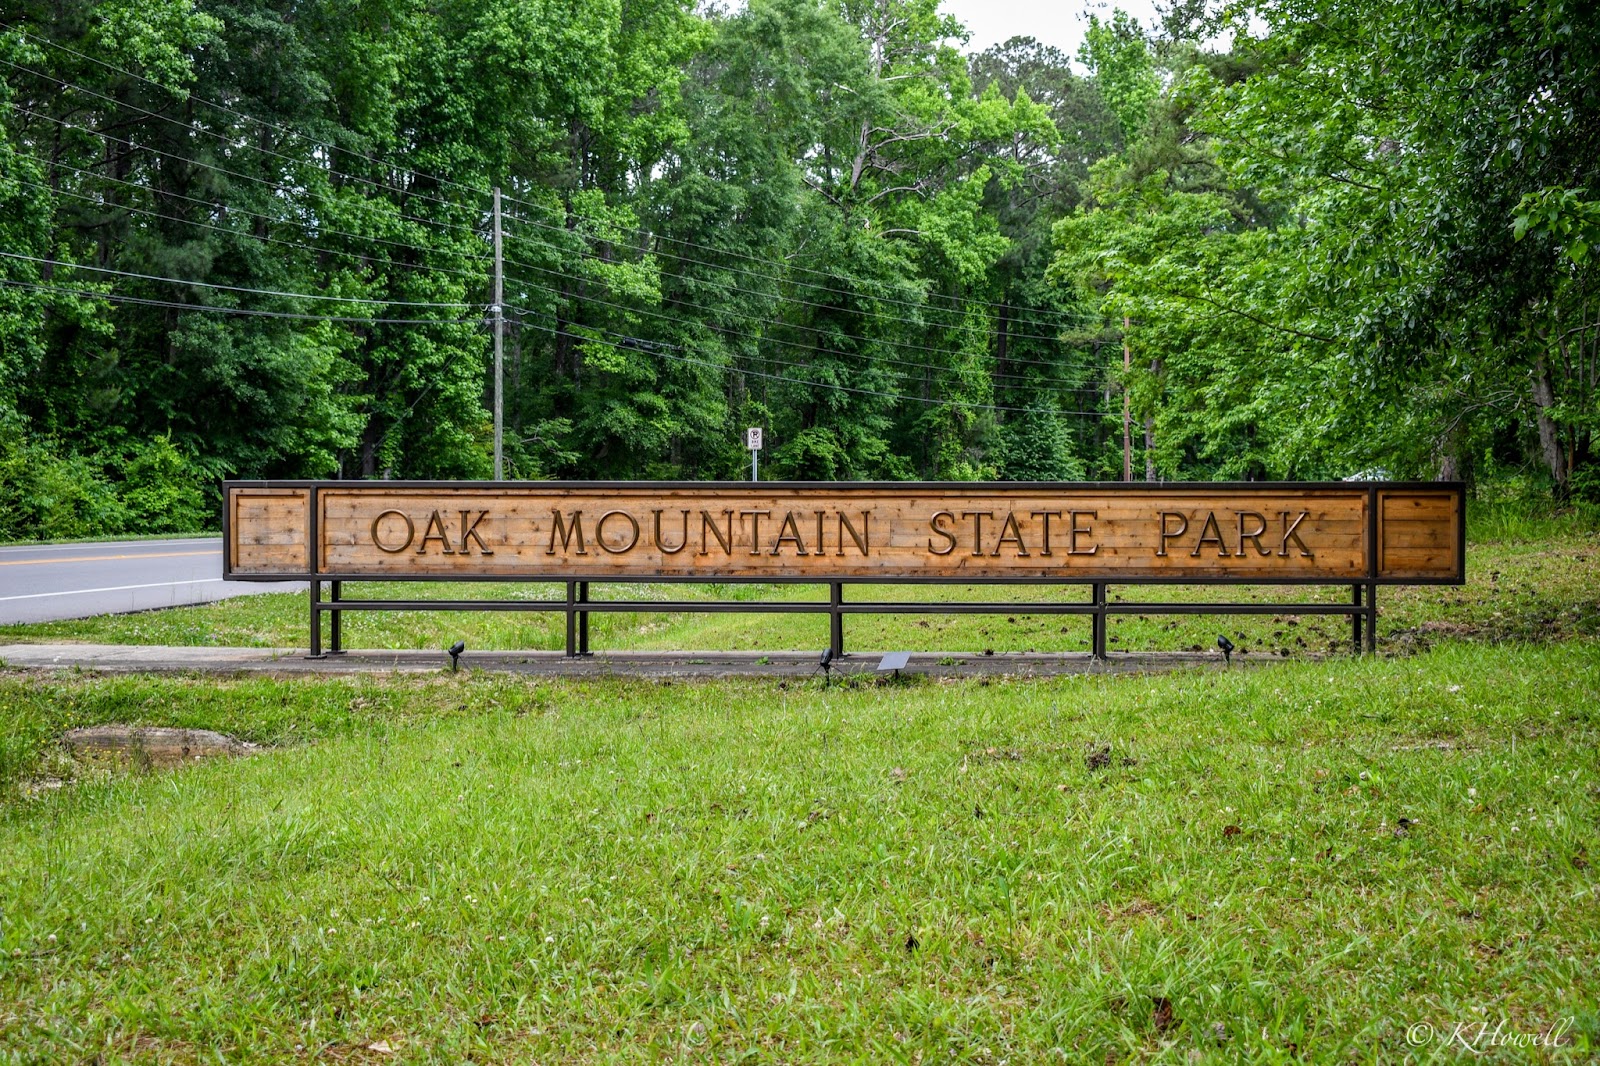 Oak Mountain State Park in Pelham, Alabama. Part of the Greater Birmingham area